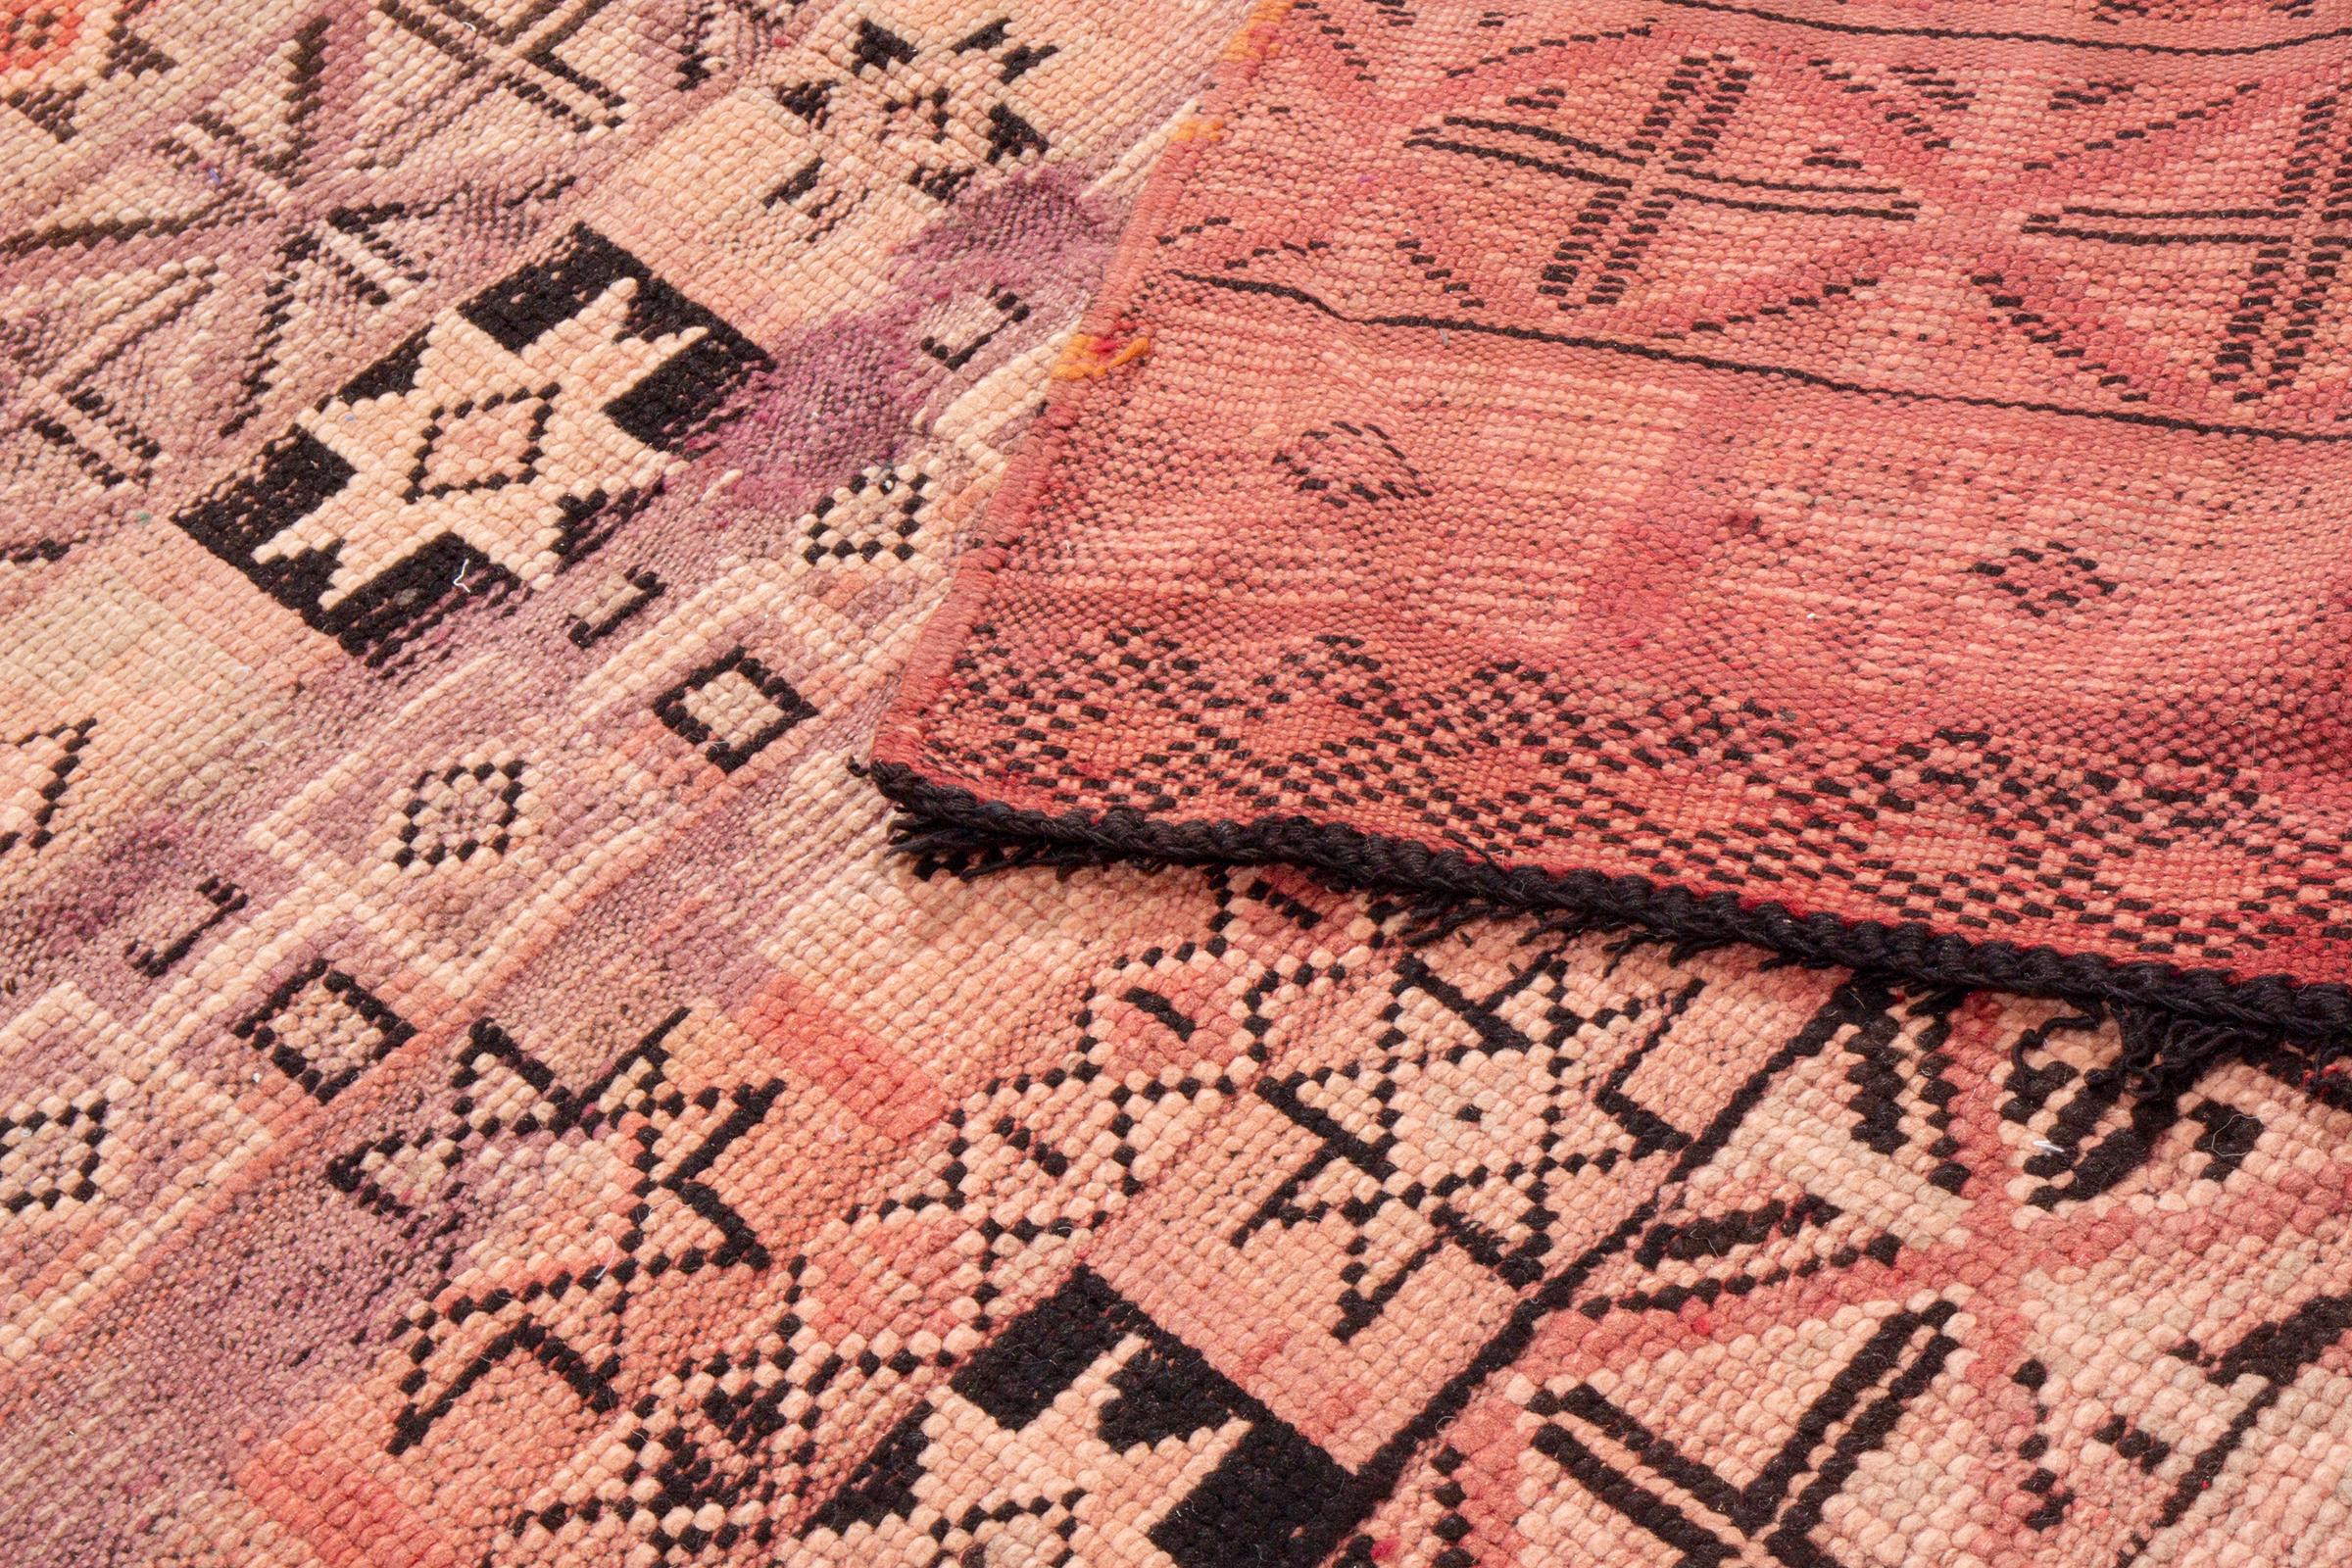 Mid-20th Century 1950s Vintage Midcentury Moroccan Rug Beige Pink Tribal Geometric Pattern